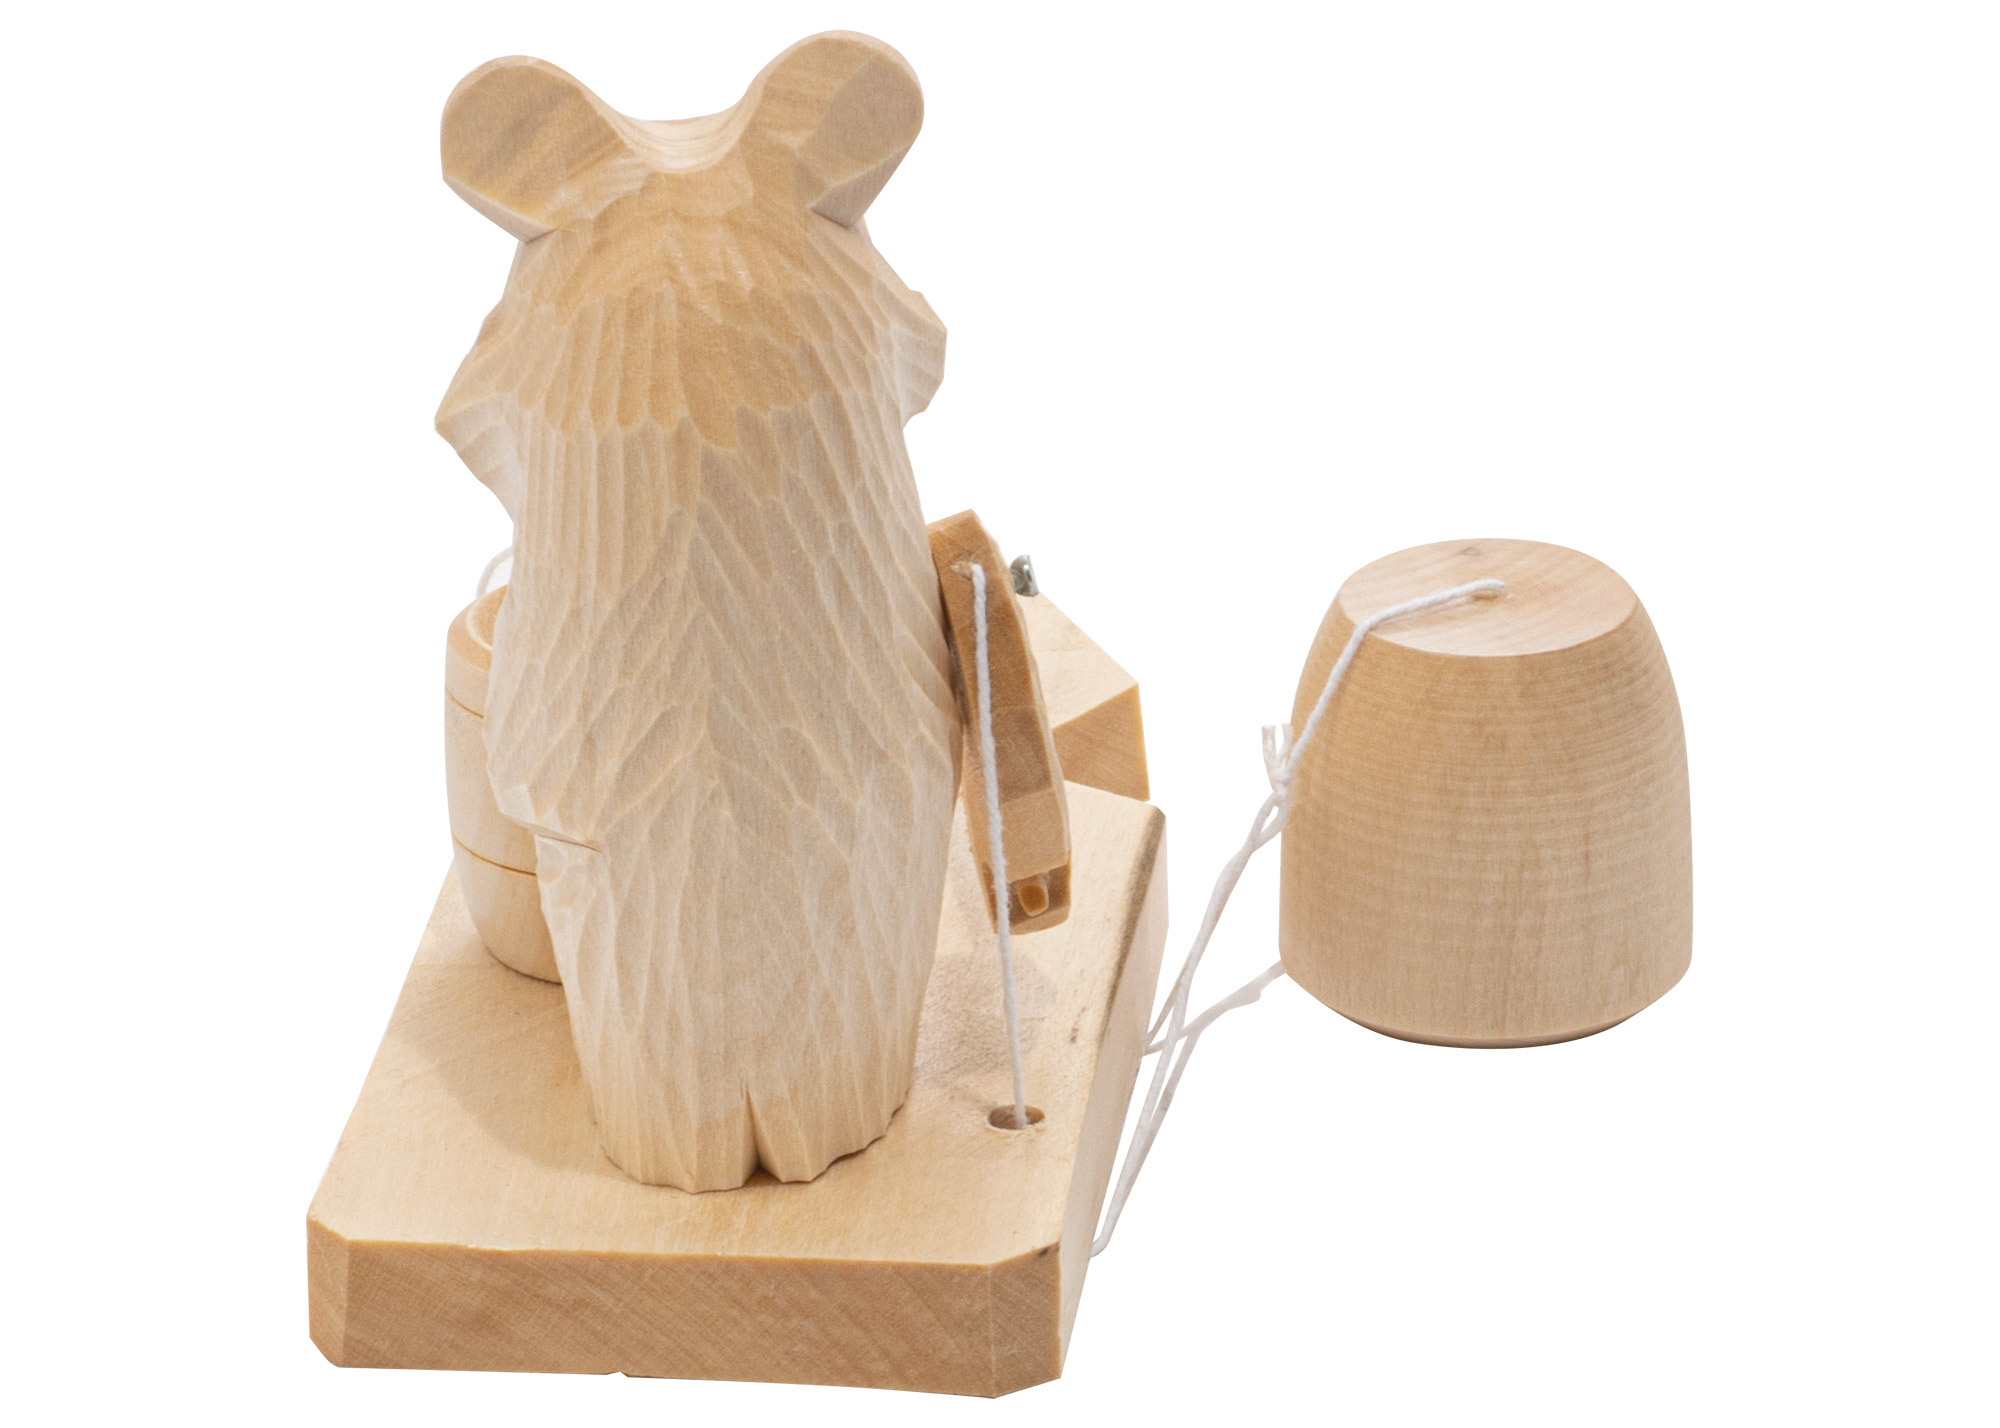 Buy Fishing Bear Carved Toy at GoldenCockerel.com